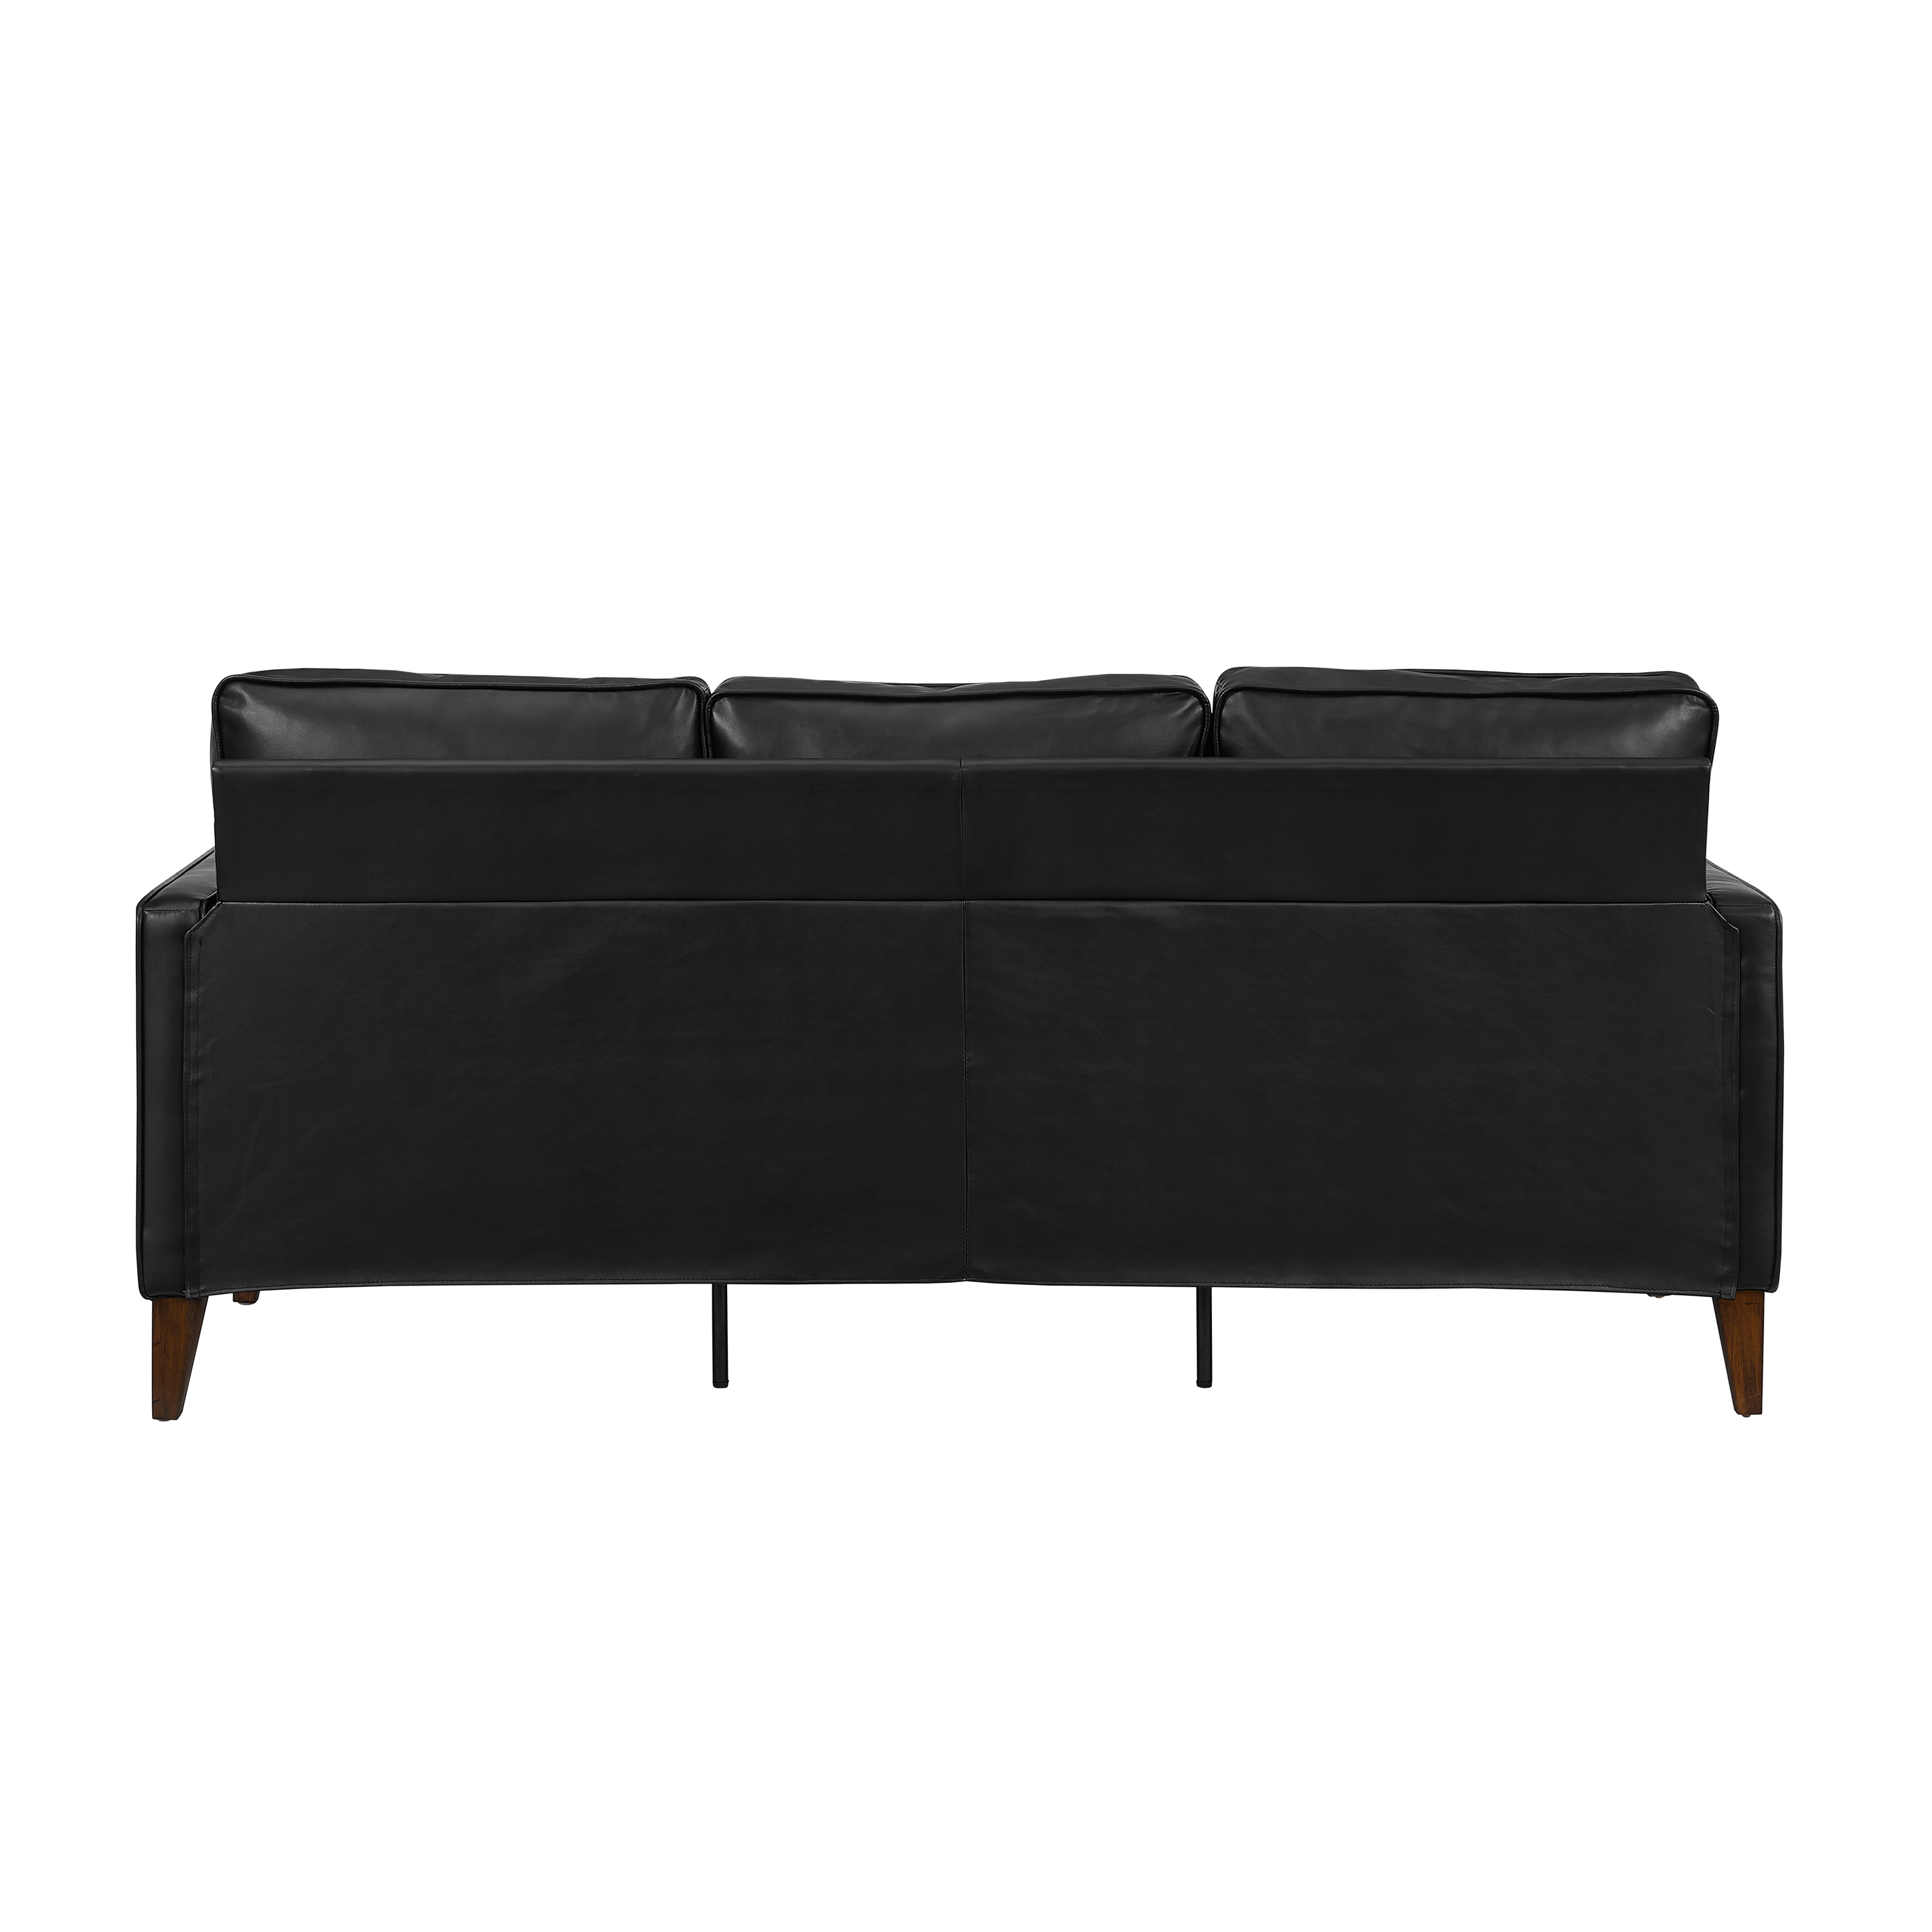 Hillsdale Jianna Faux Leather Sofa, Black - image 12 of 12